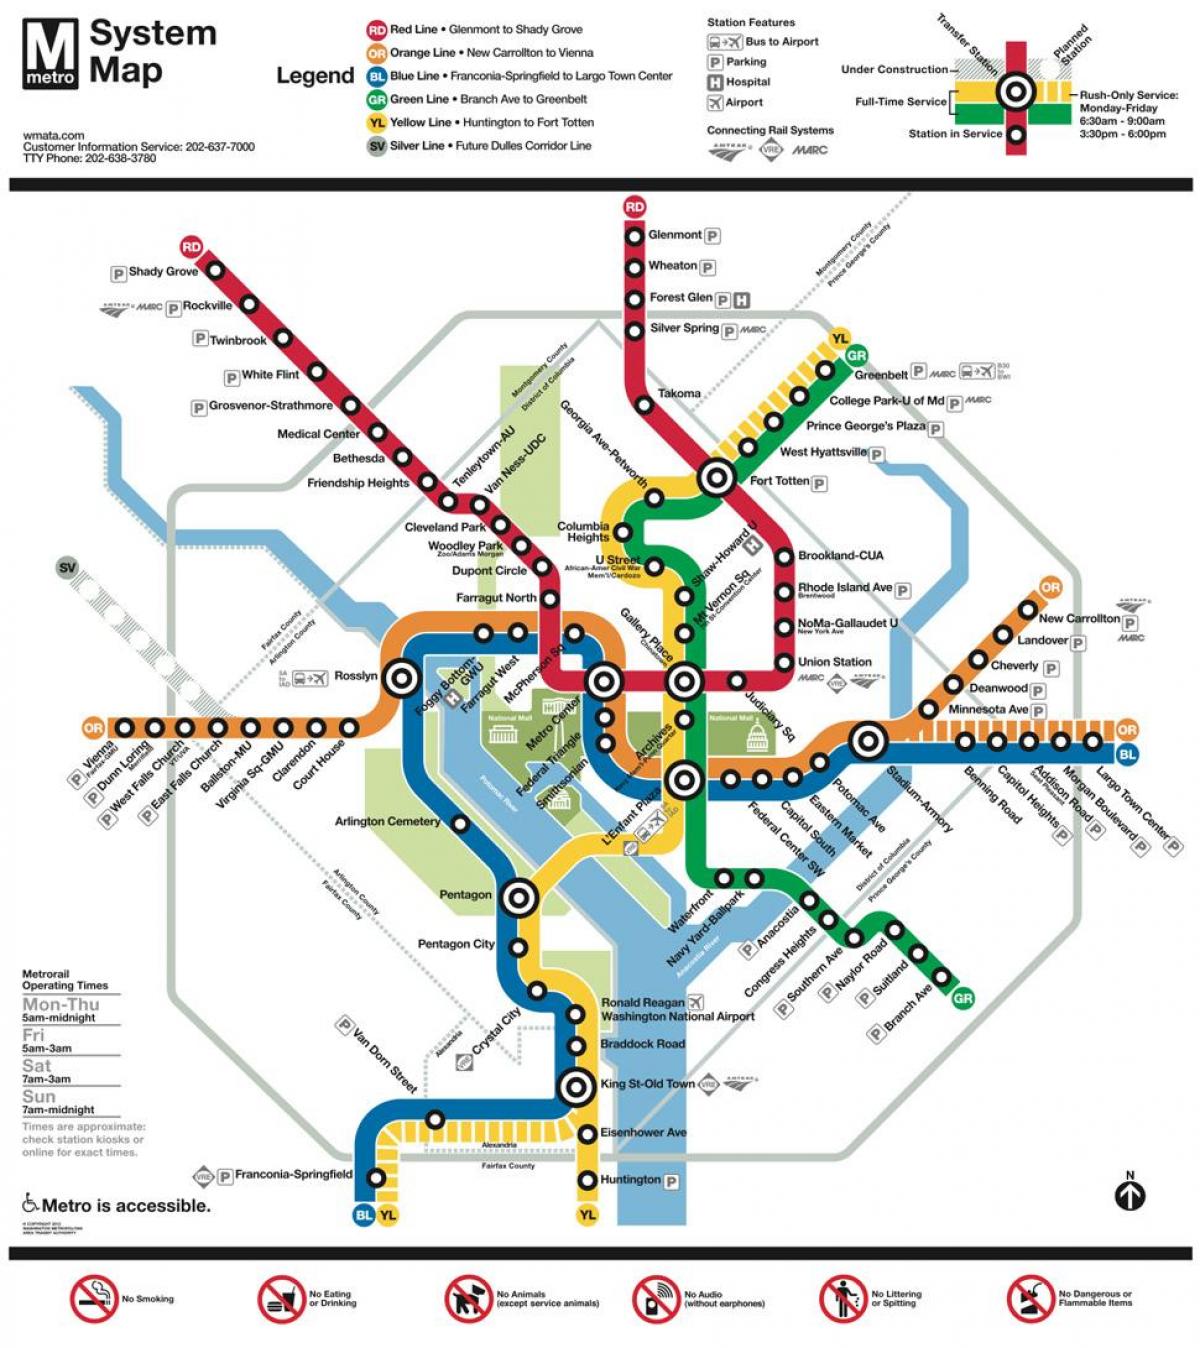 dca mapa del metro